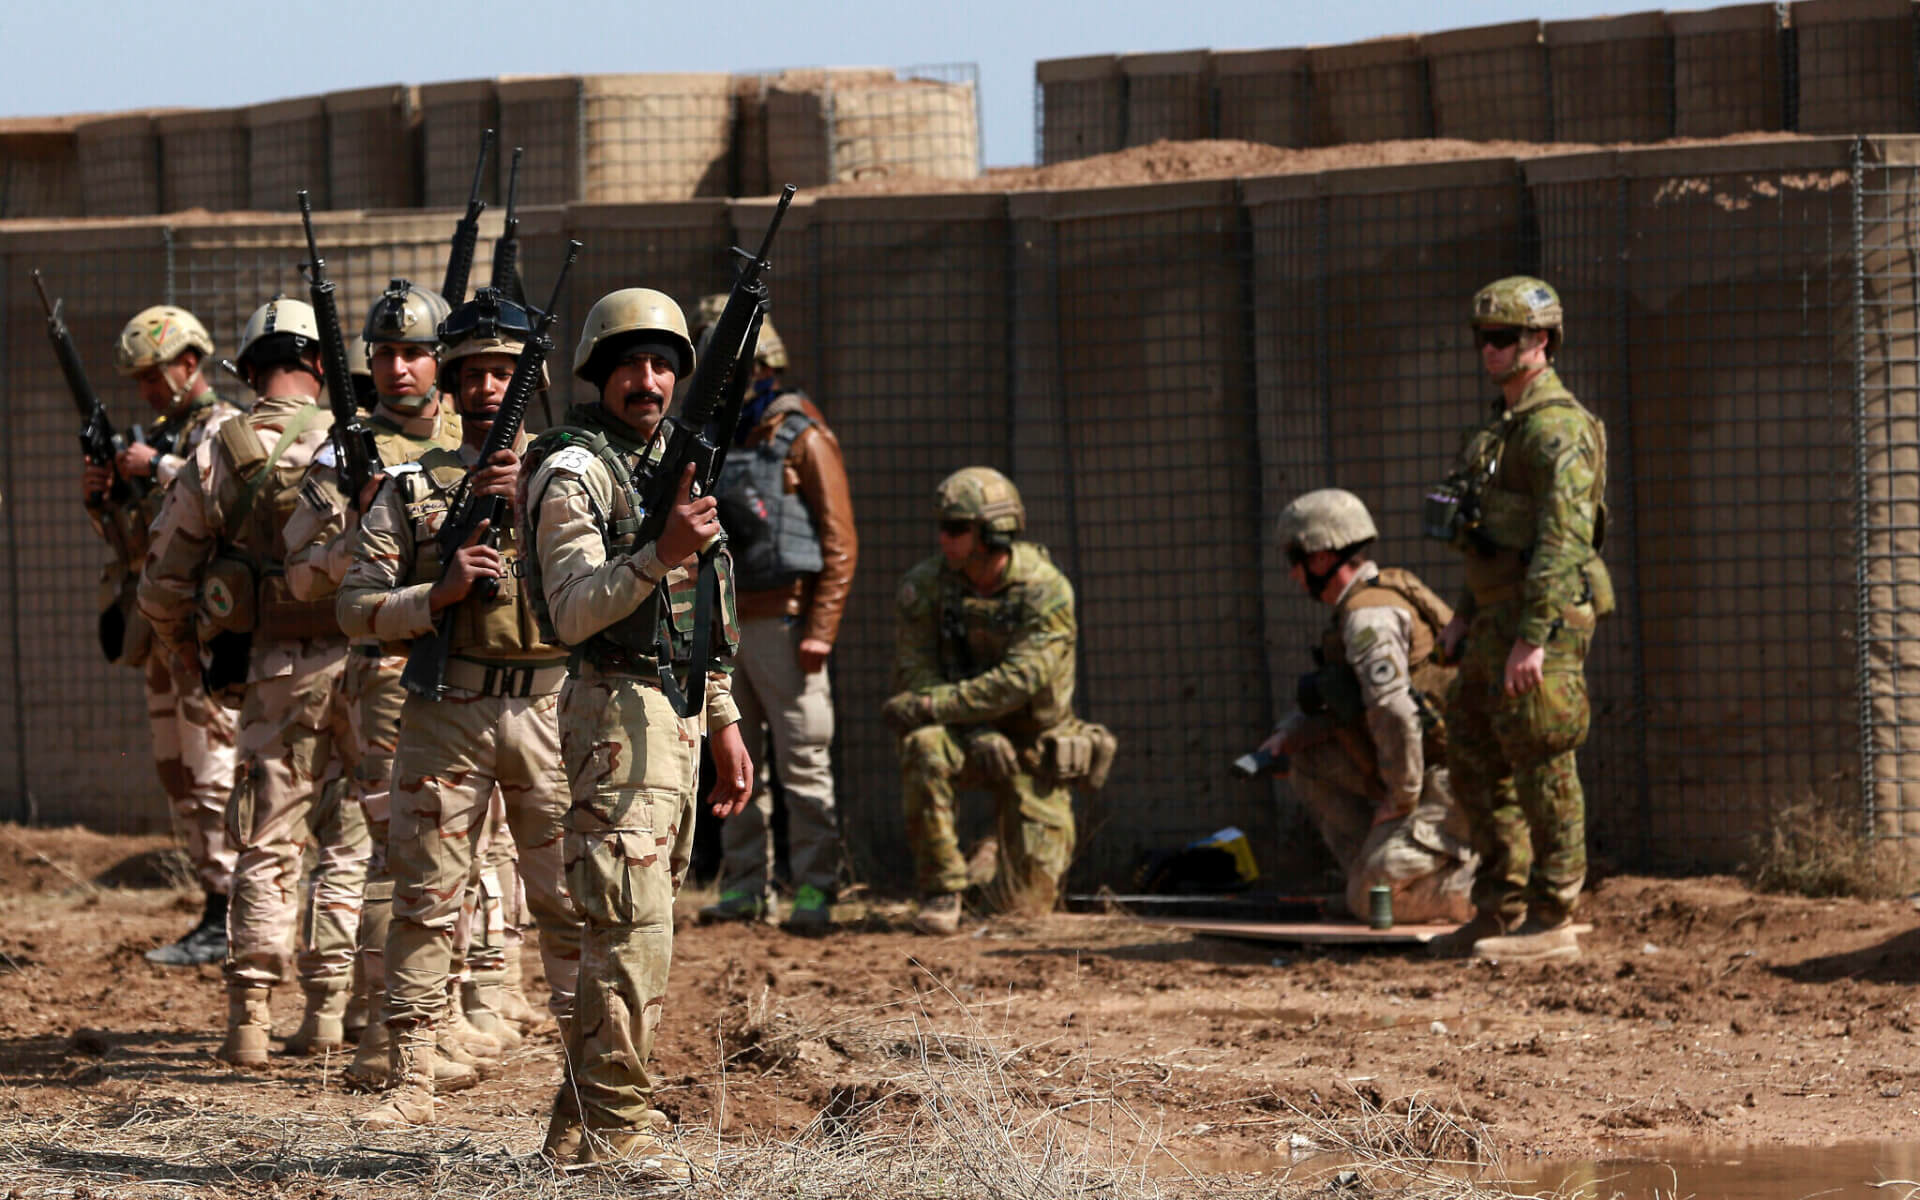 18 Rockets Strike Coalition Military Base Near Baghdad, 2 Americans and 1 Briton Killed